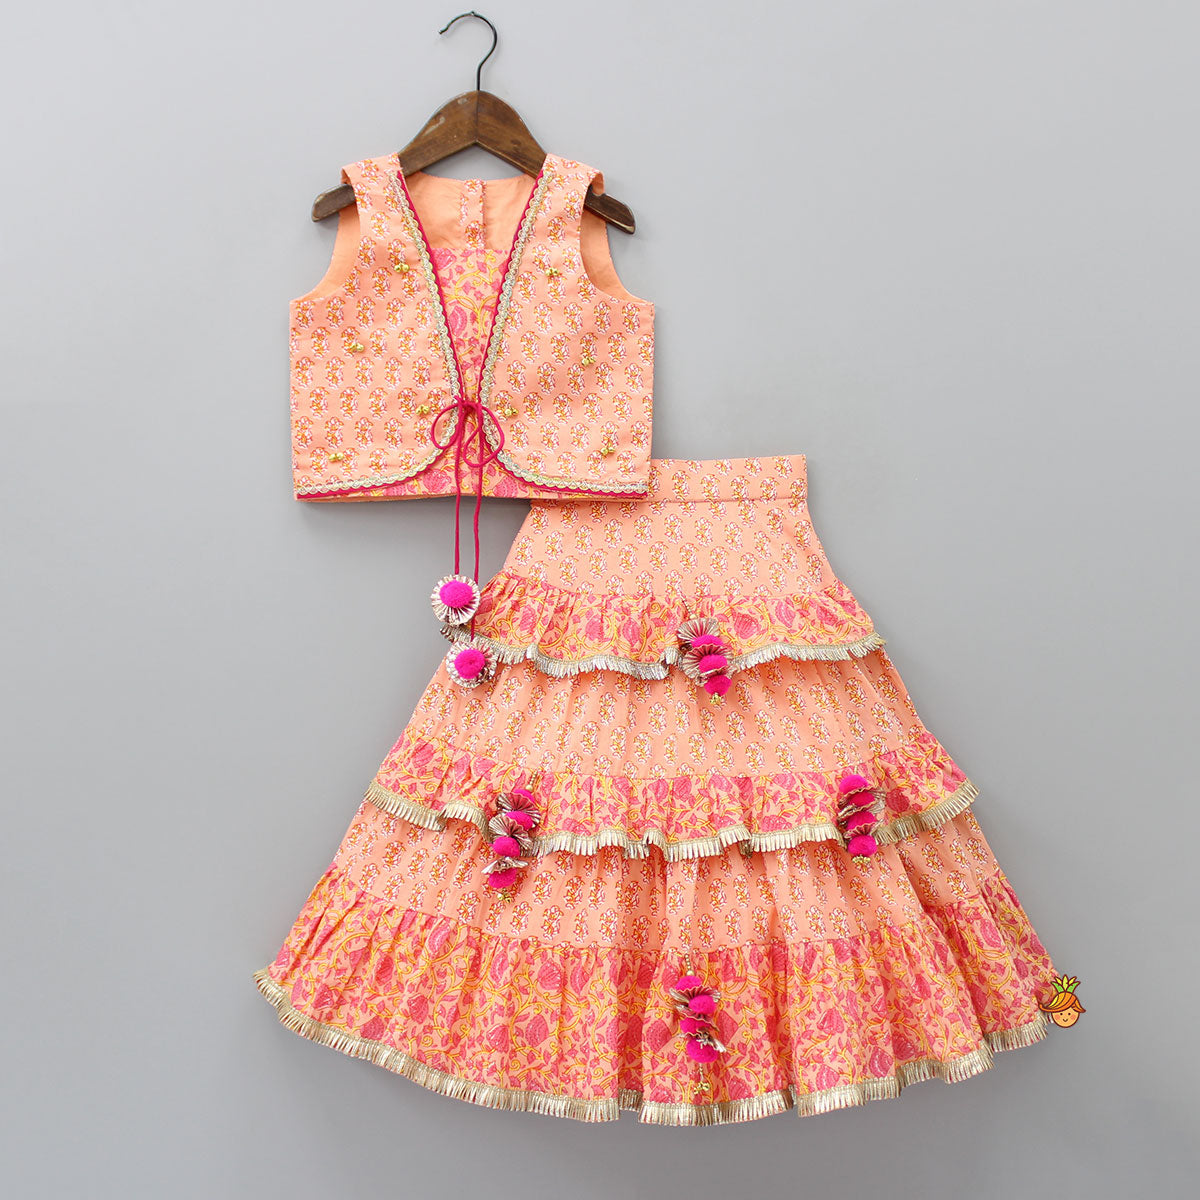 Buy Kritika Kids Baby Girl's Ready to wear Sleeveless Lehenga Choli Age (1-3)  Year (Pink) at Amazon.in